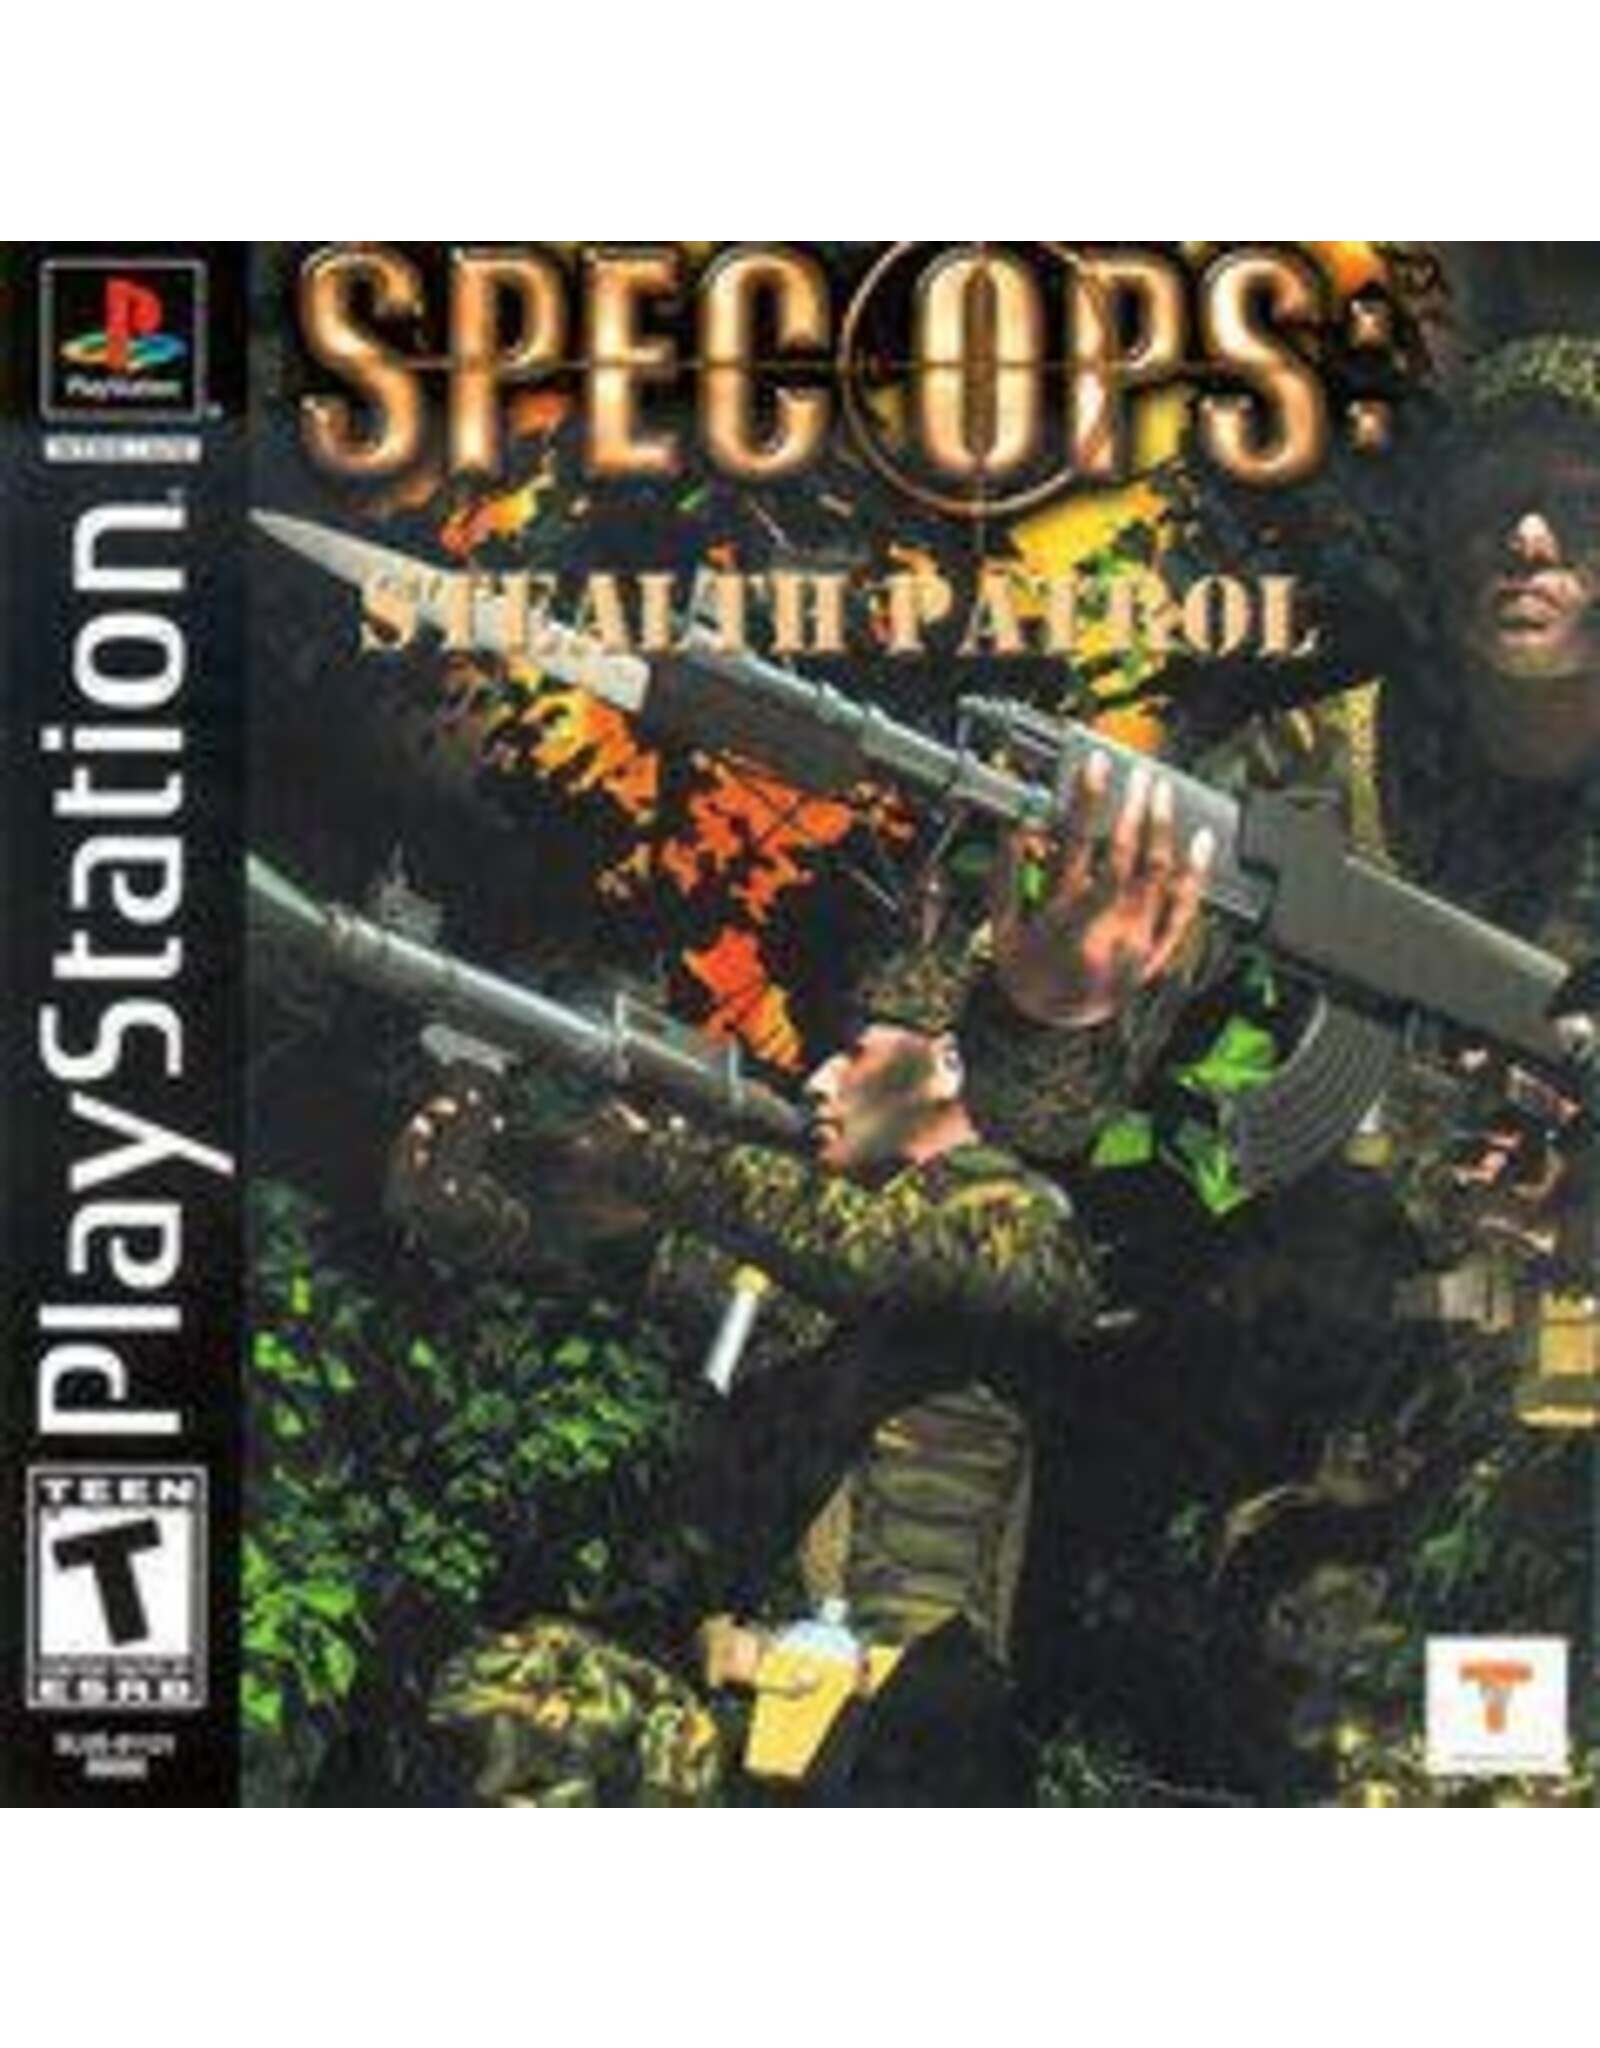 Playstation Spec Ops Stealth Patrol (CiB)